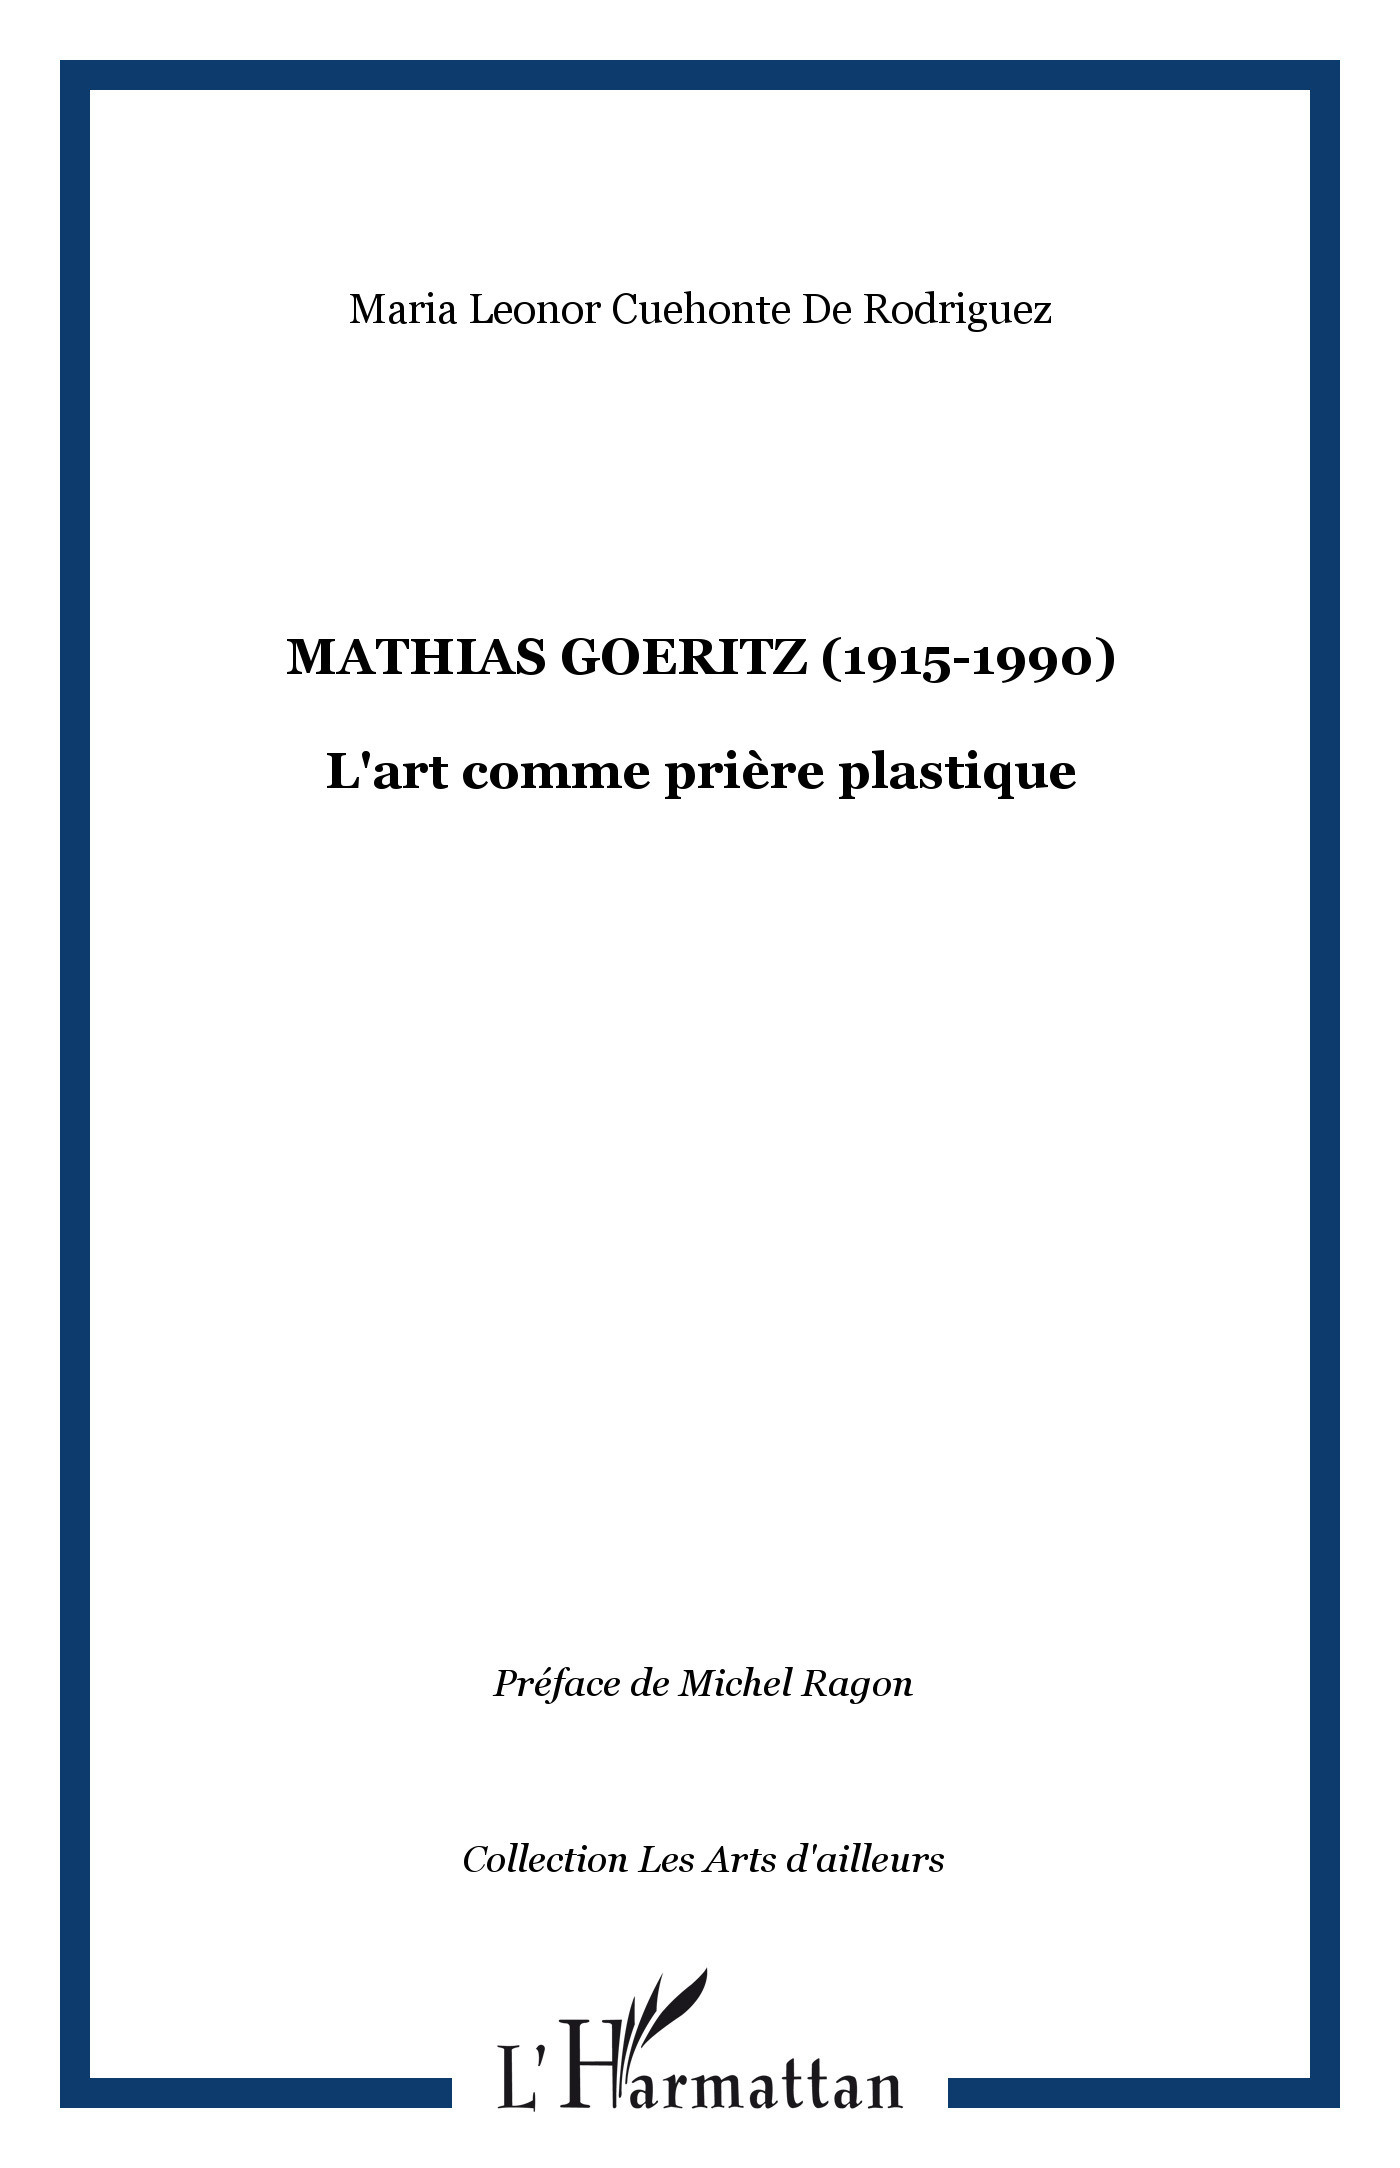 MATHIAS GOERITZ (1915-1990) (9782747533102-front-cover)